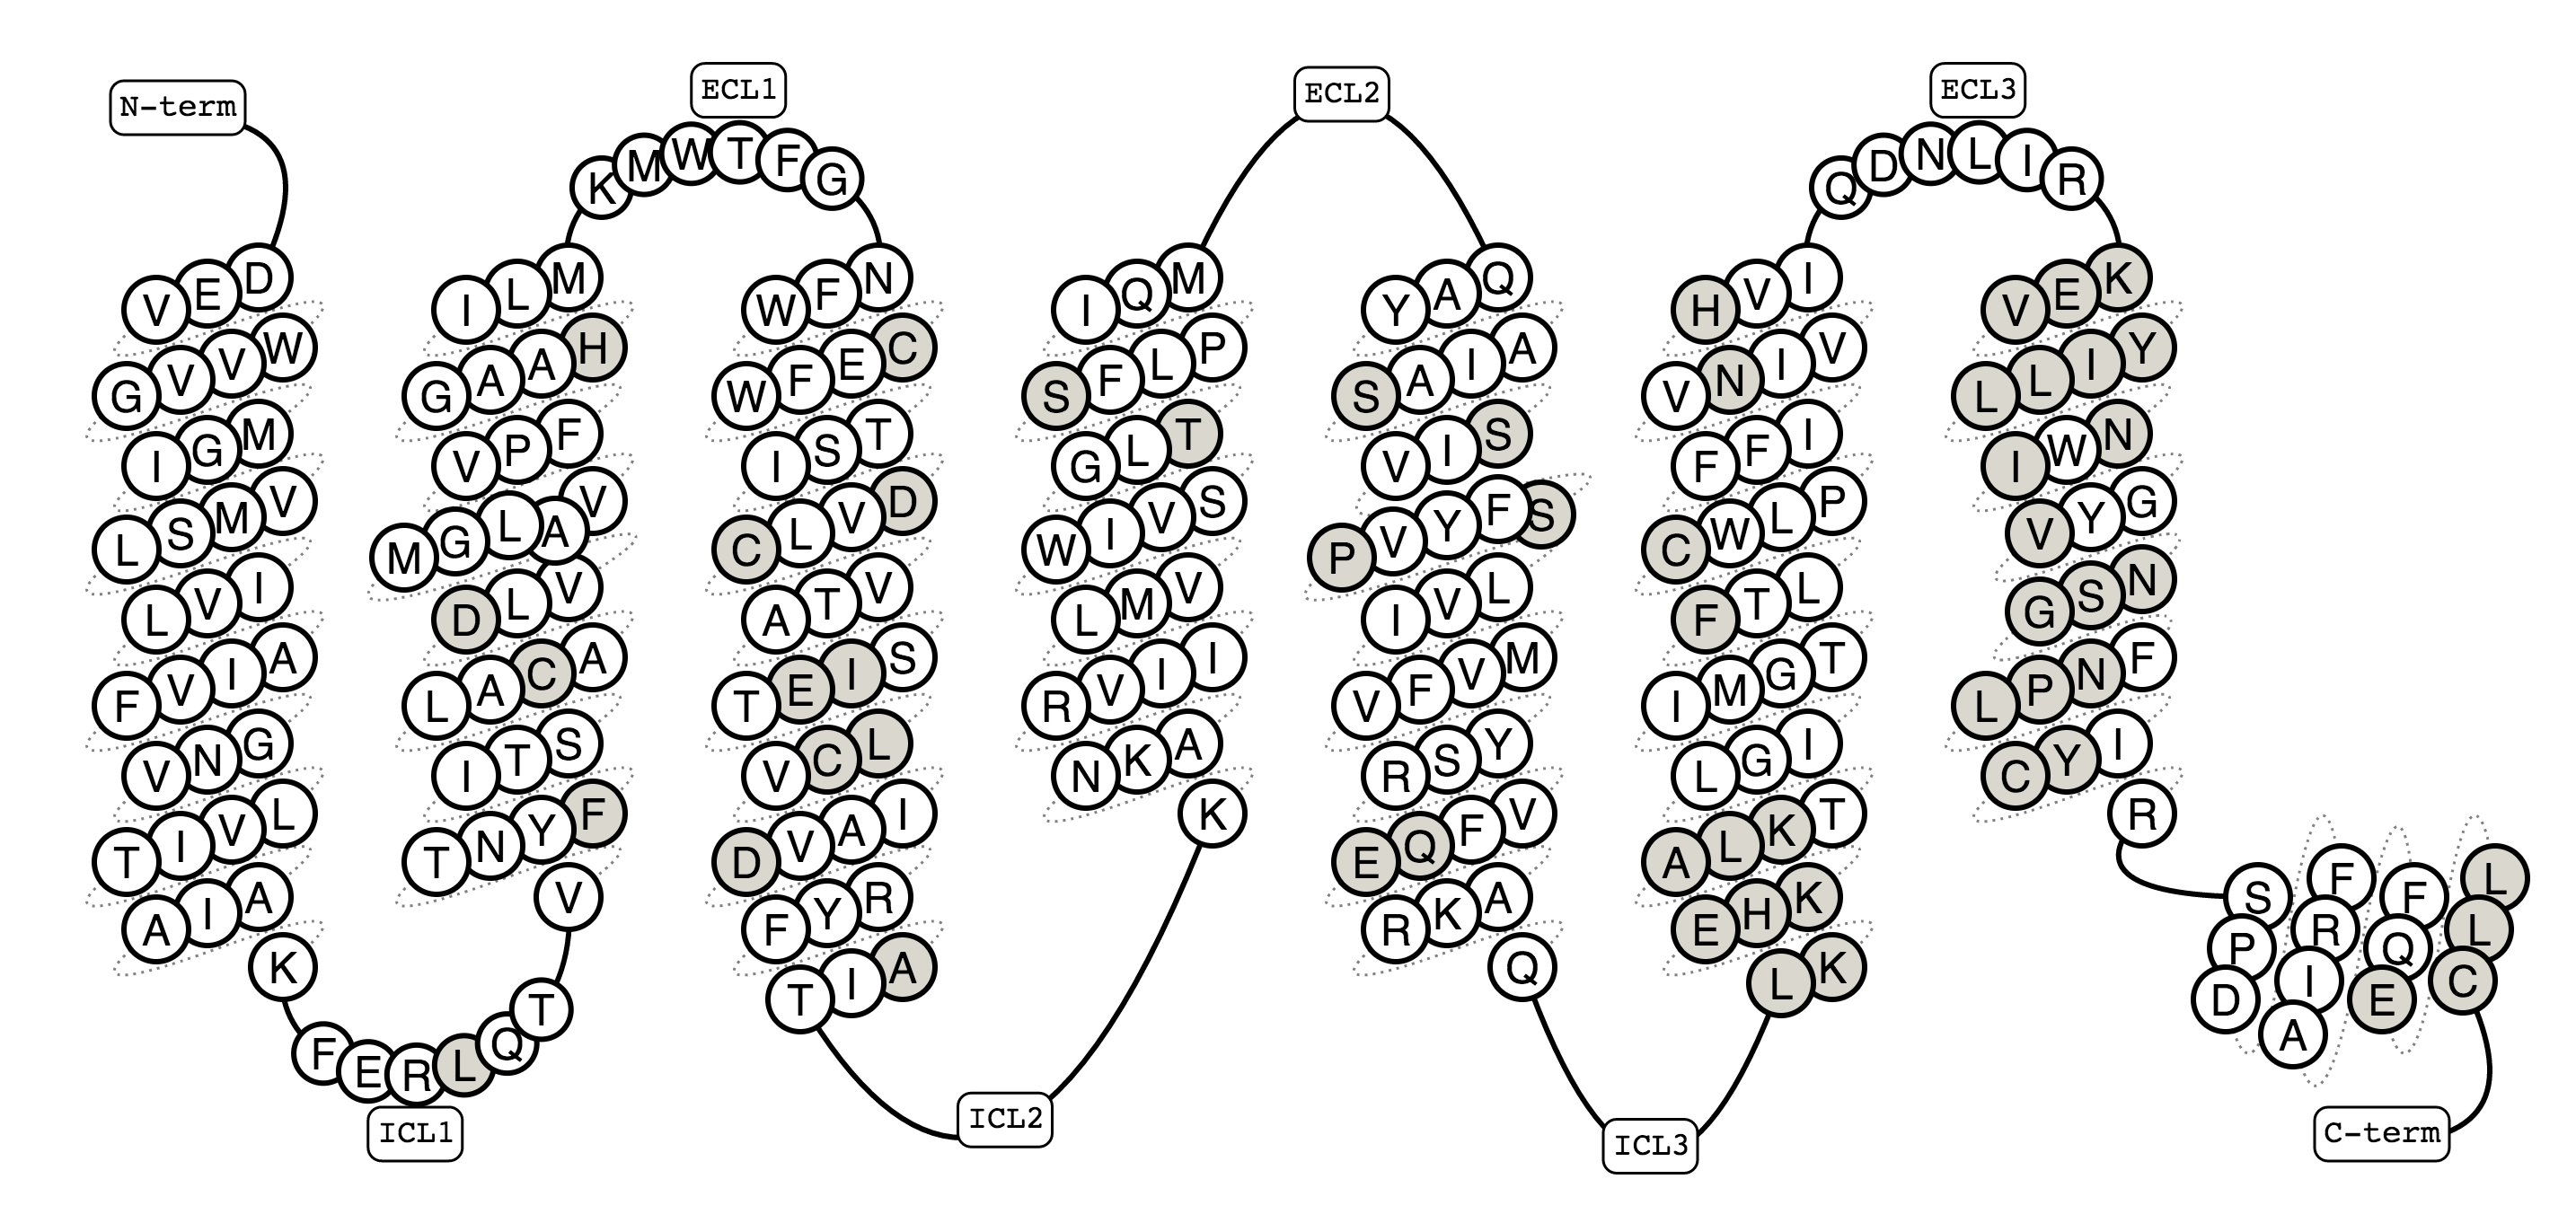 Example snake diagram